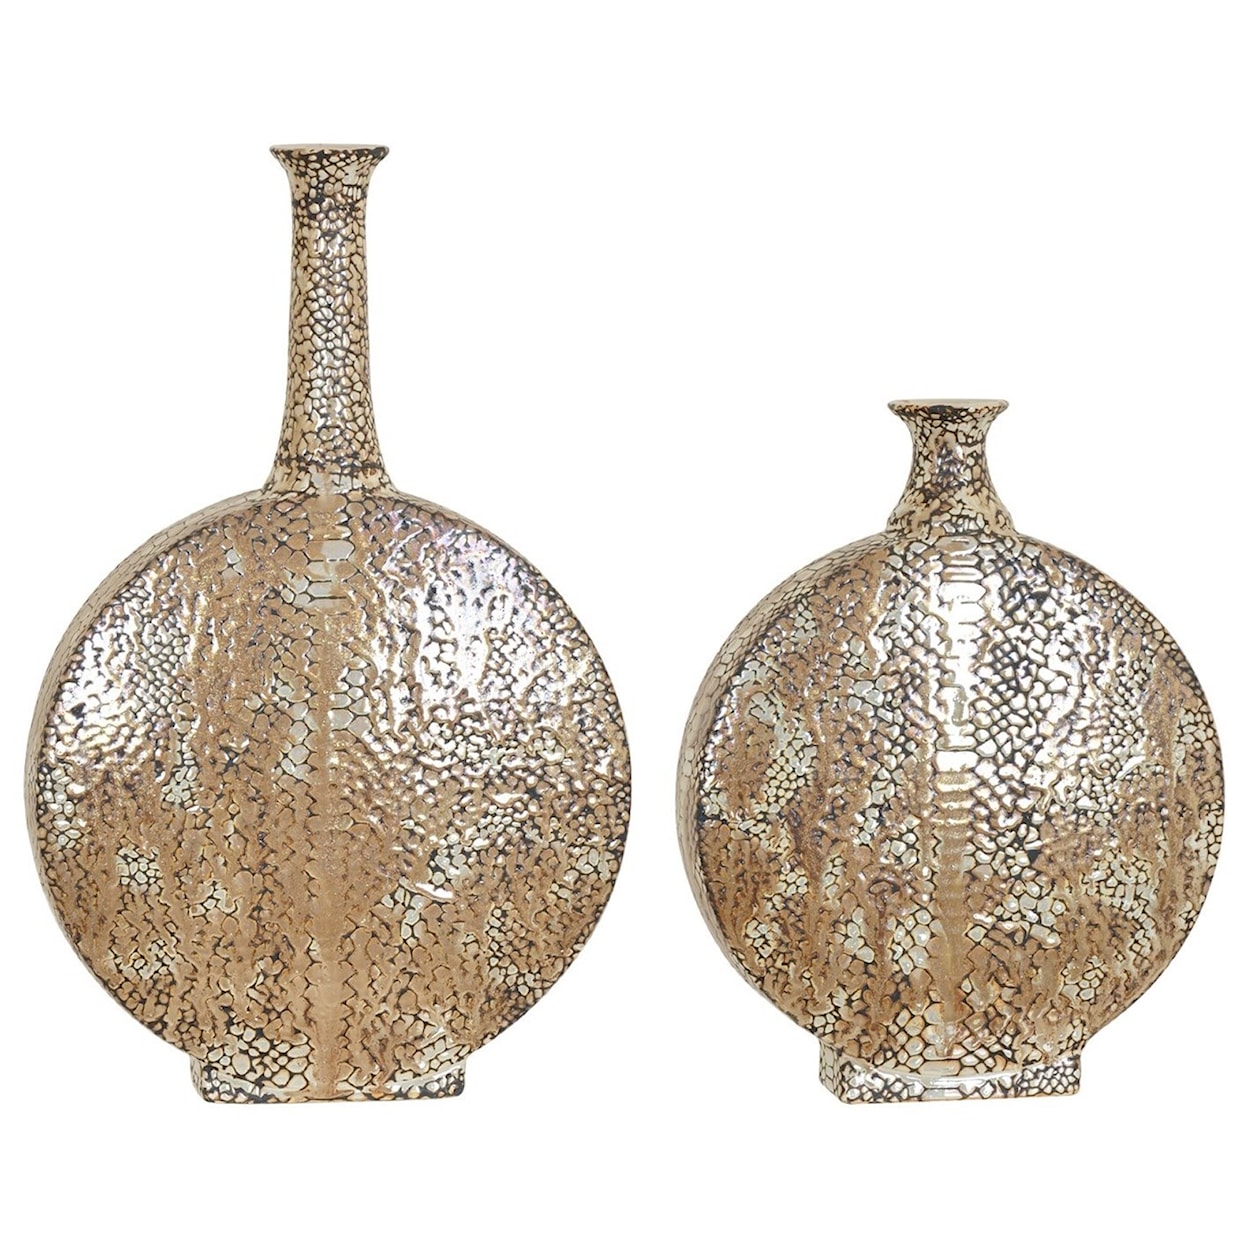 Crestview Collection Decorative Accessories McKinley Vases